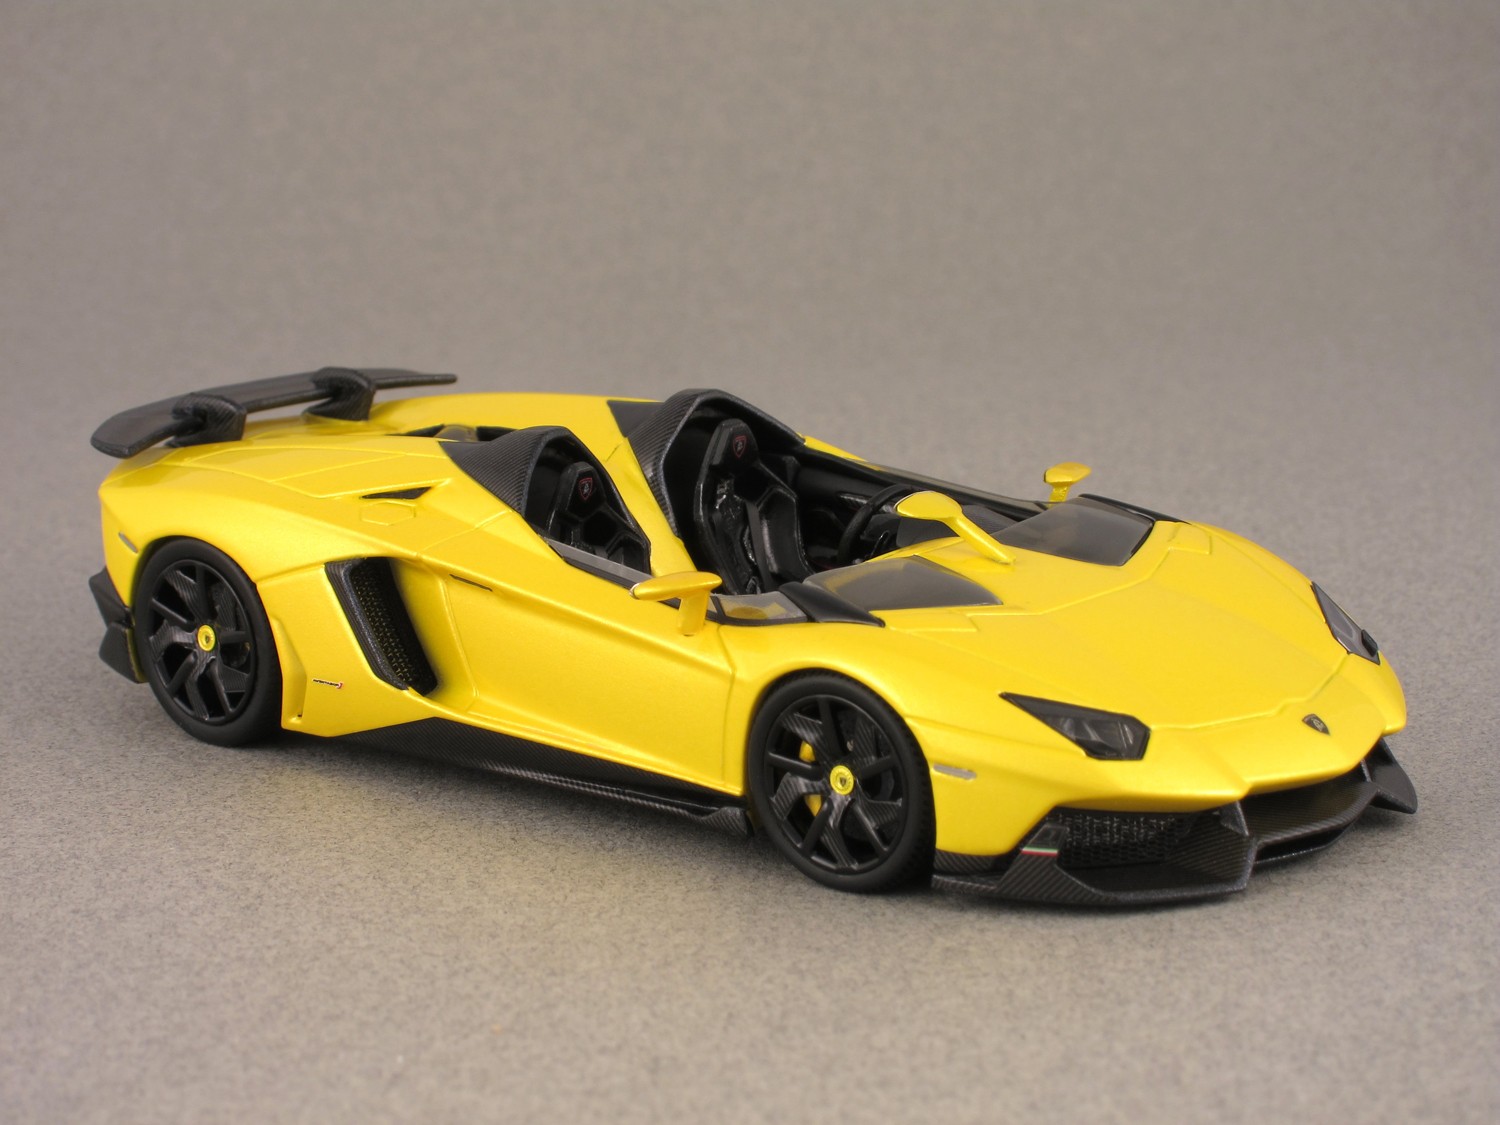 Lamborghini Aventador J yellow (LookSmart) 1:43 - Minicarweb